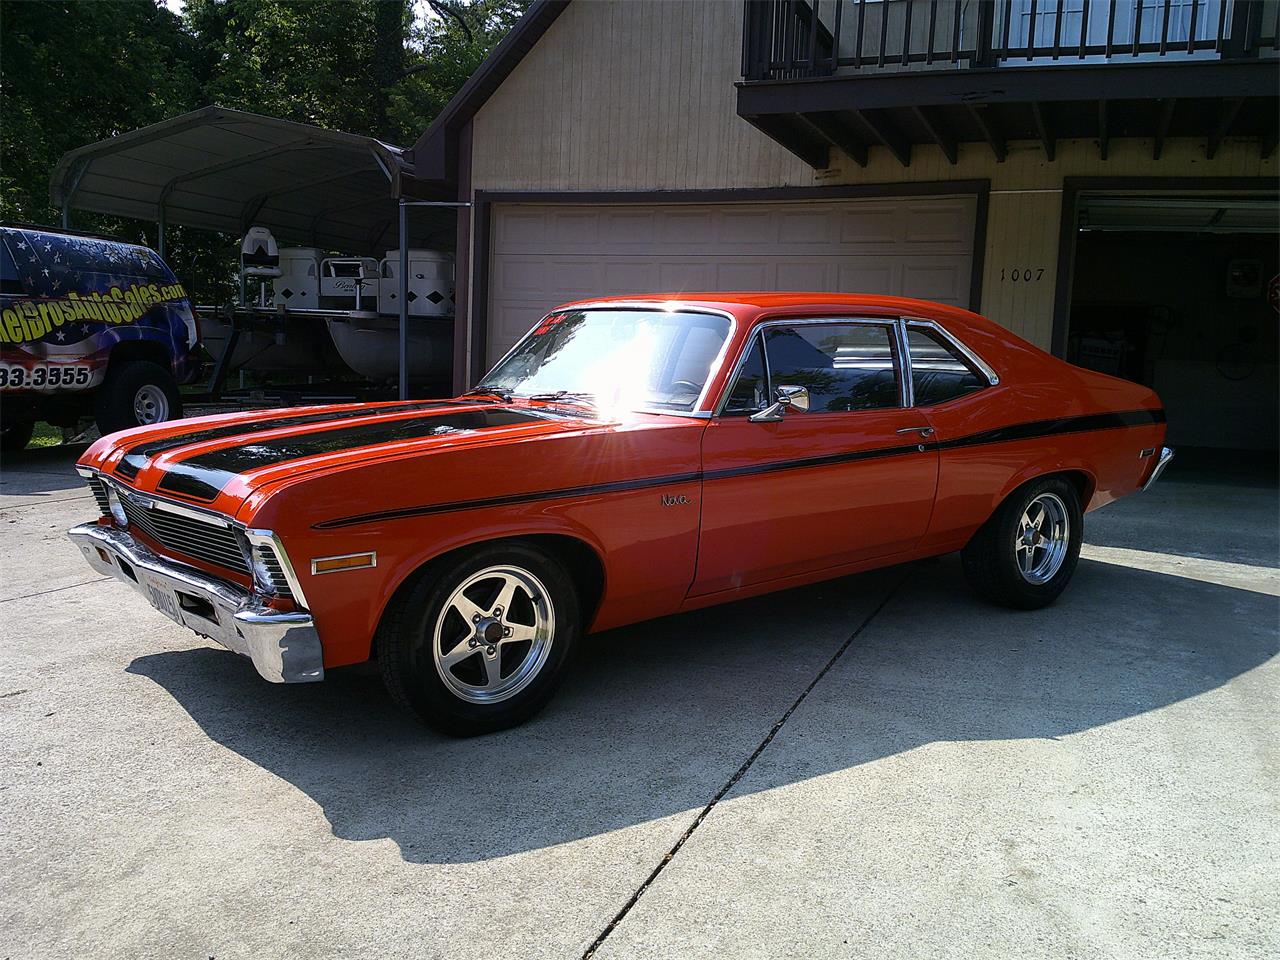 For Sale: 1972 Chevrolet Nova in West Point, Kentucky for sale in West Point, KY